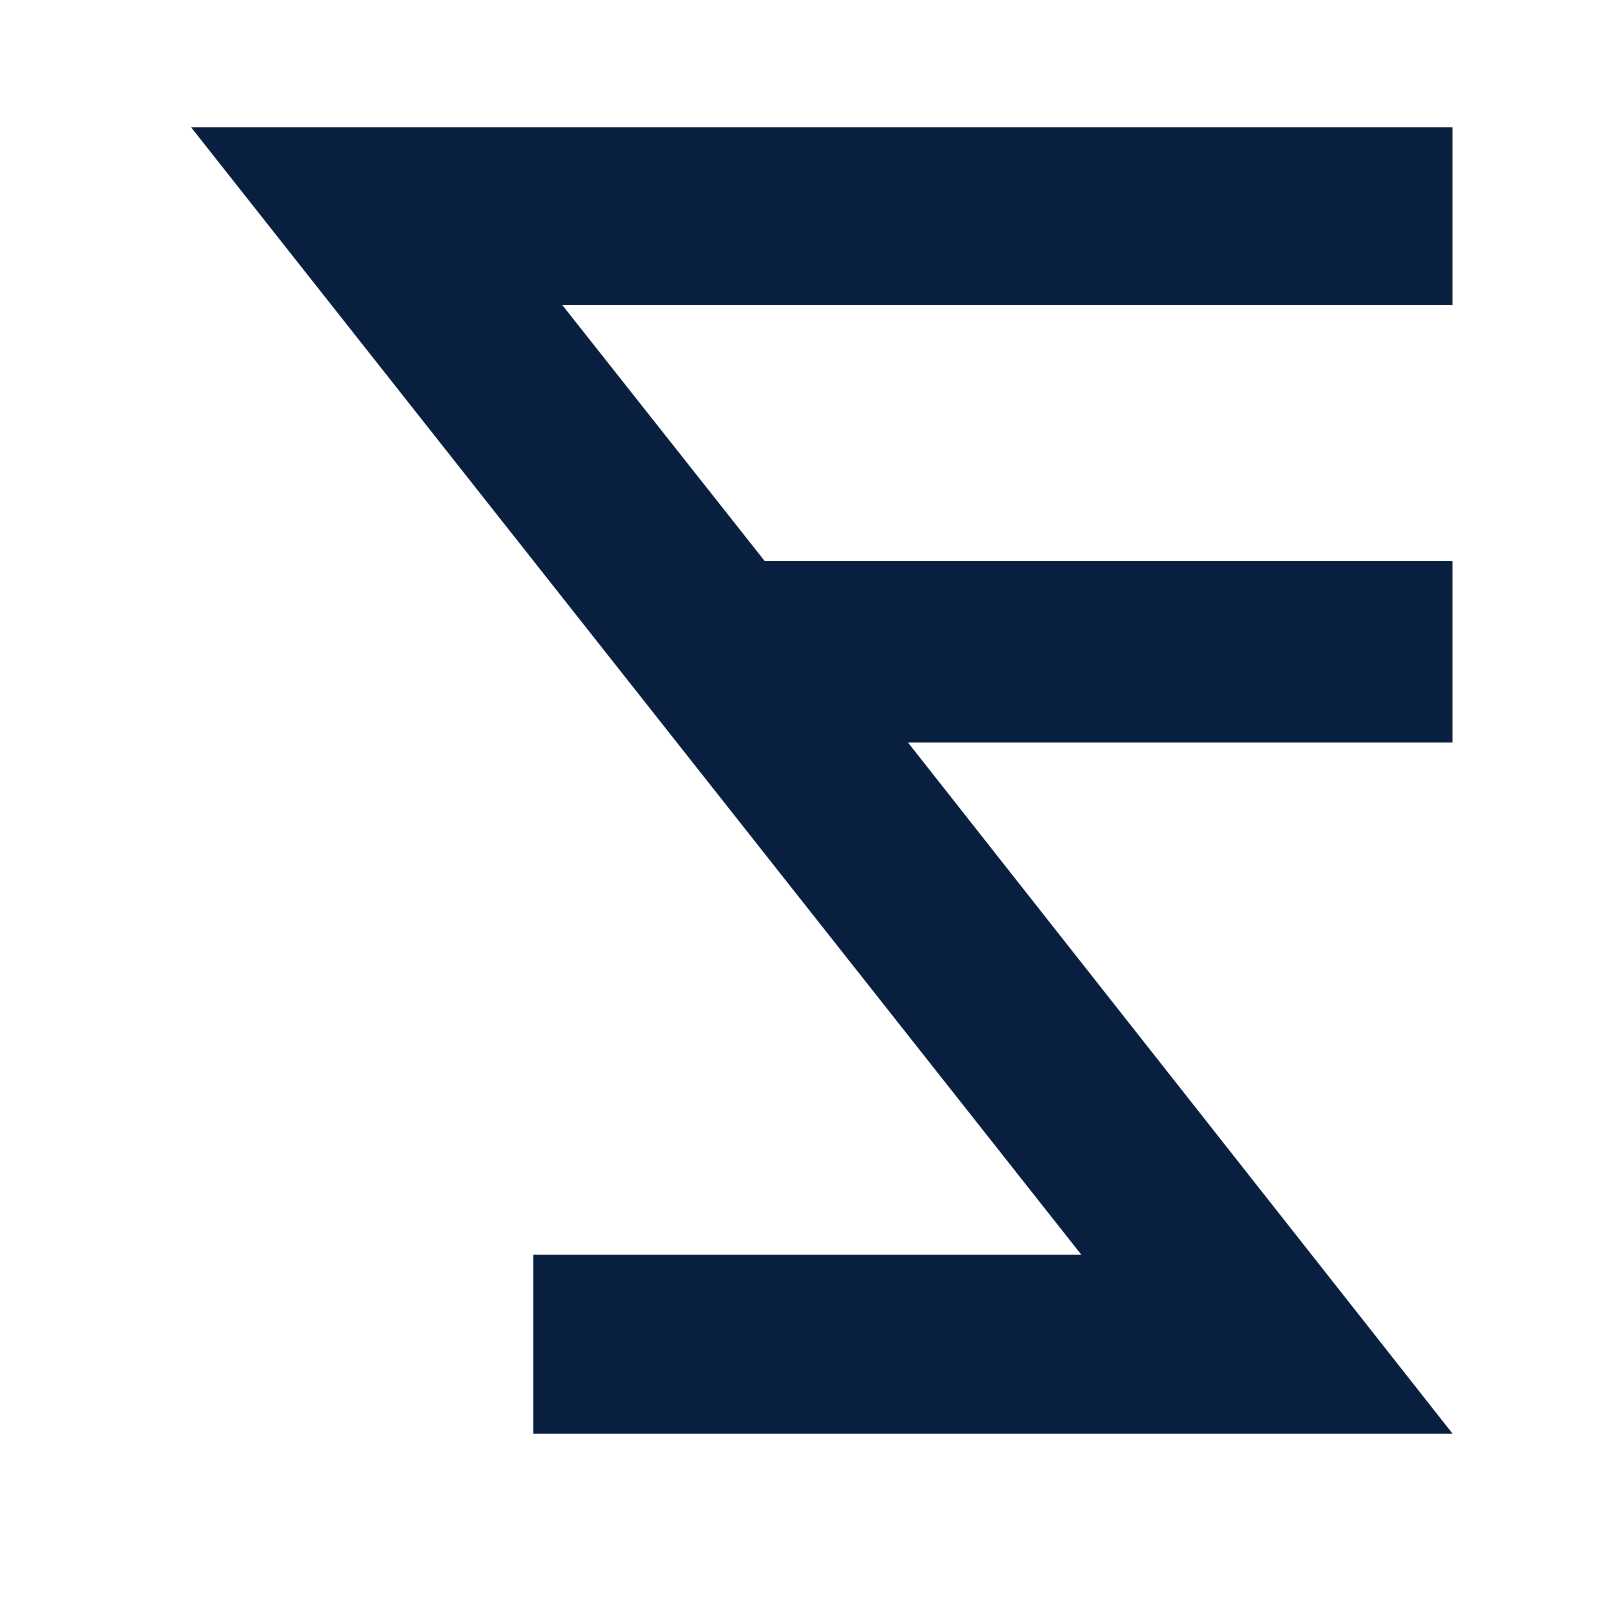 Company logo for Shipsfocus Ventures Pte. Ltd.